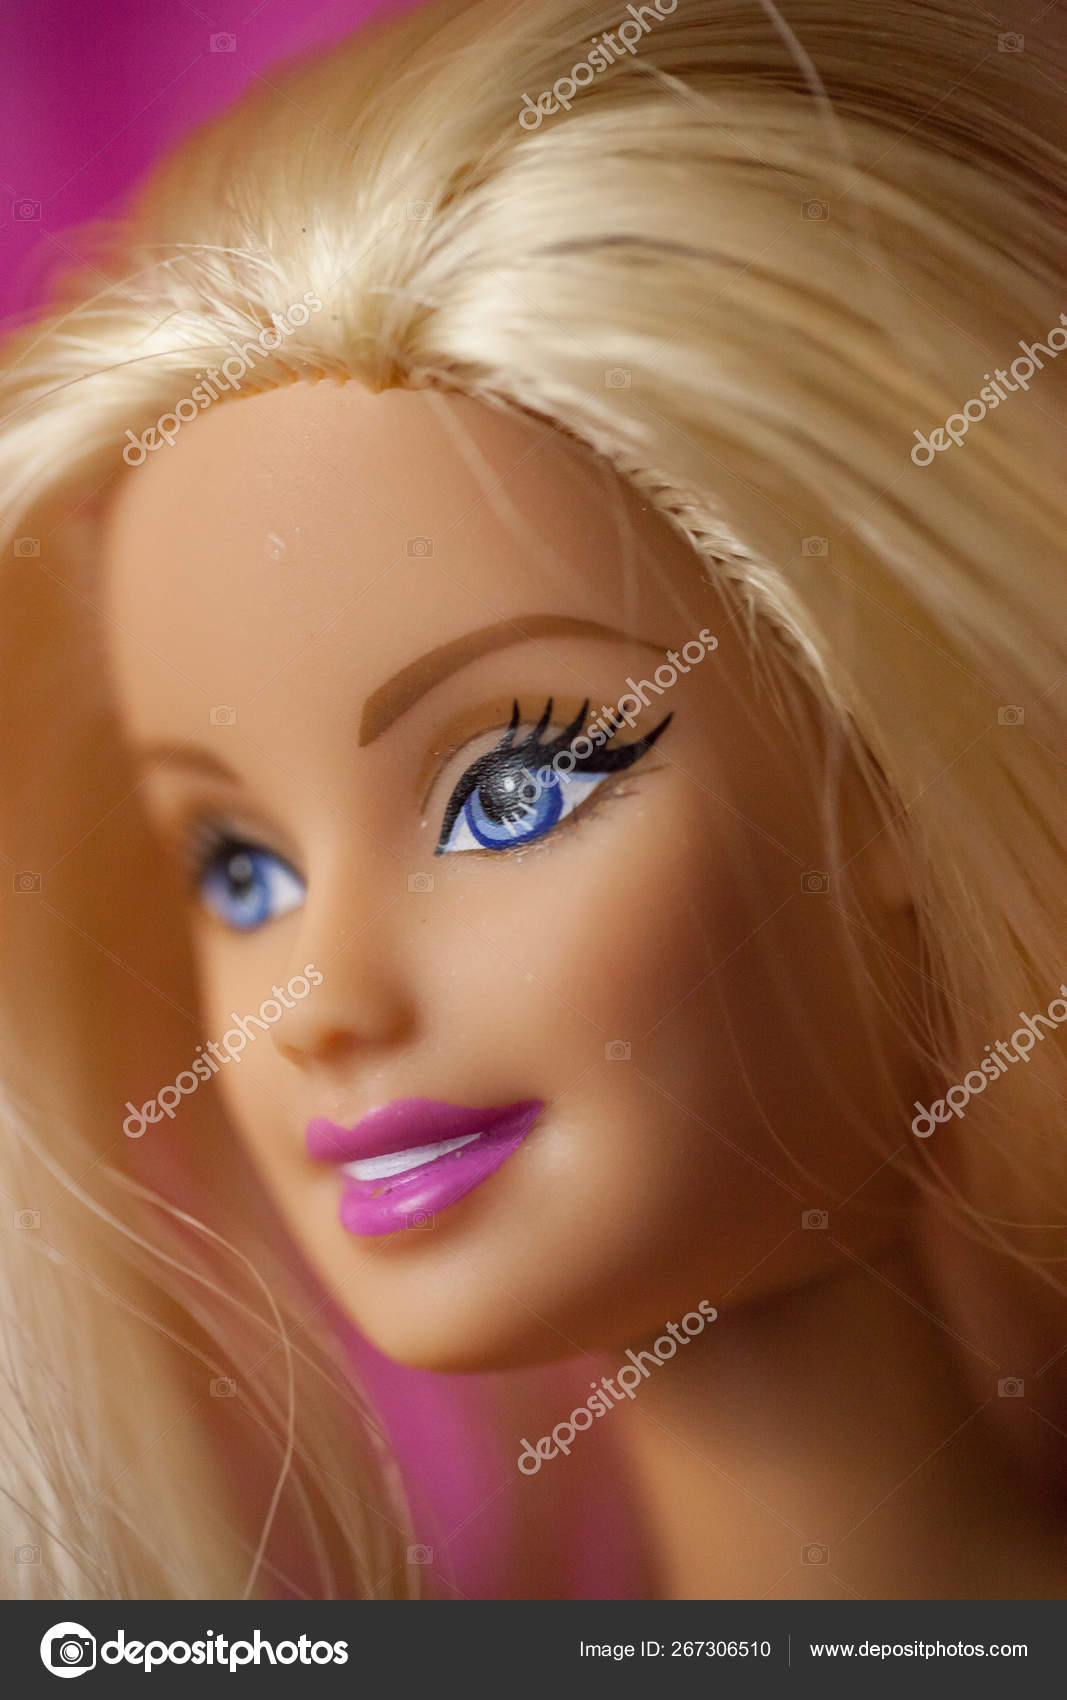 barbie doll 2000s